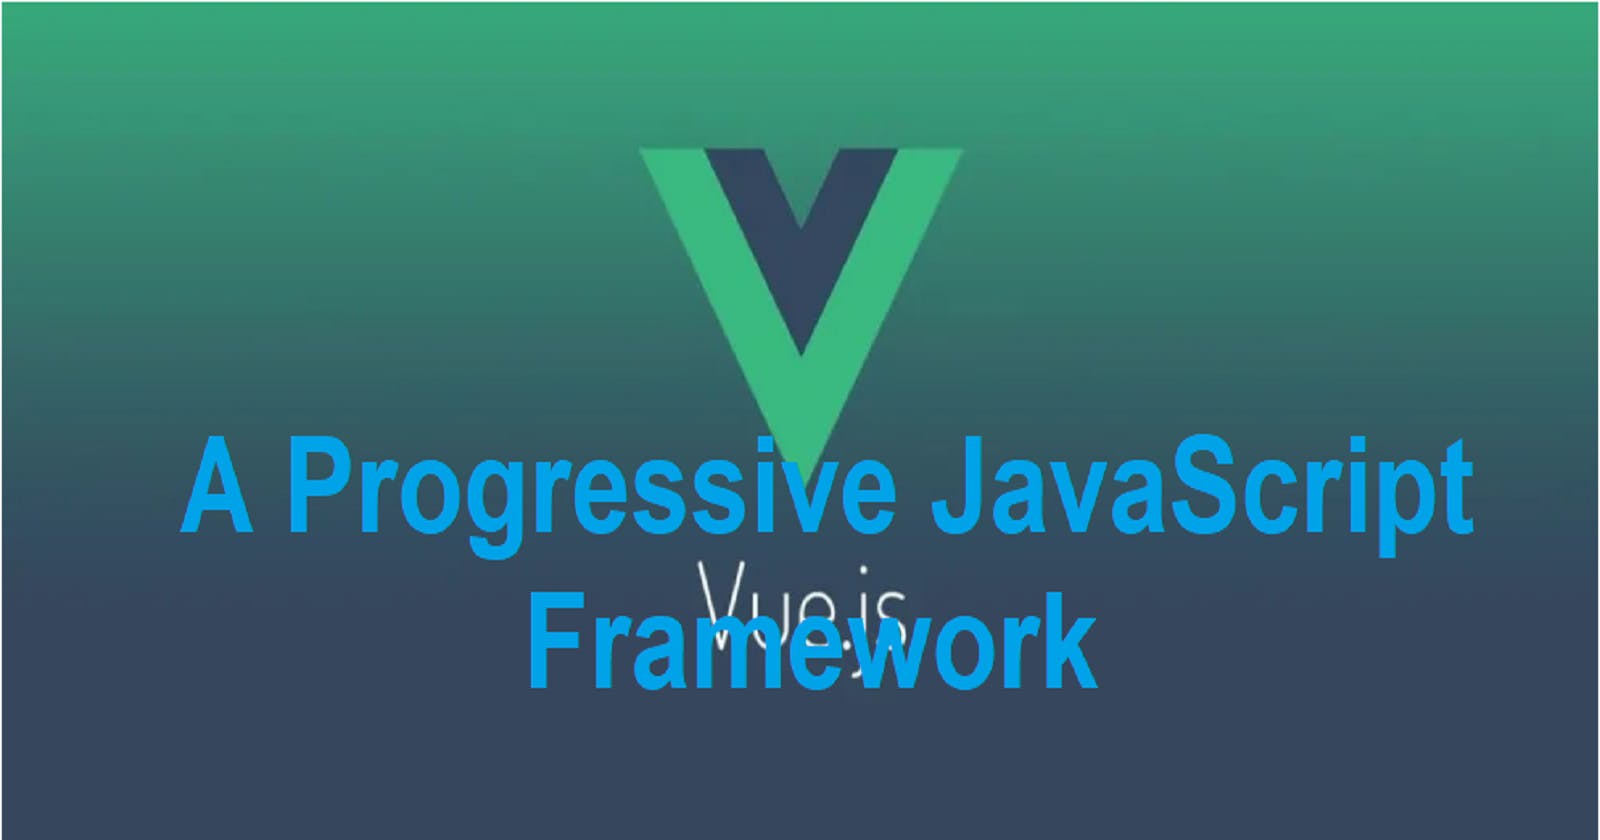 Introduction to Vue.js - A Progressive JavaScript Framework